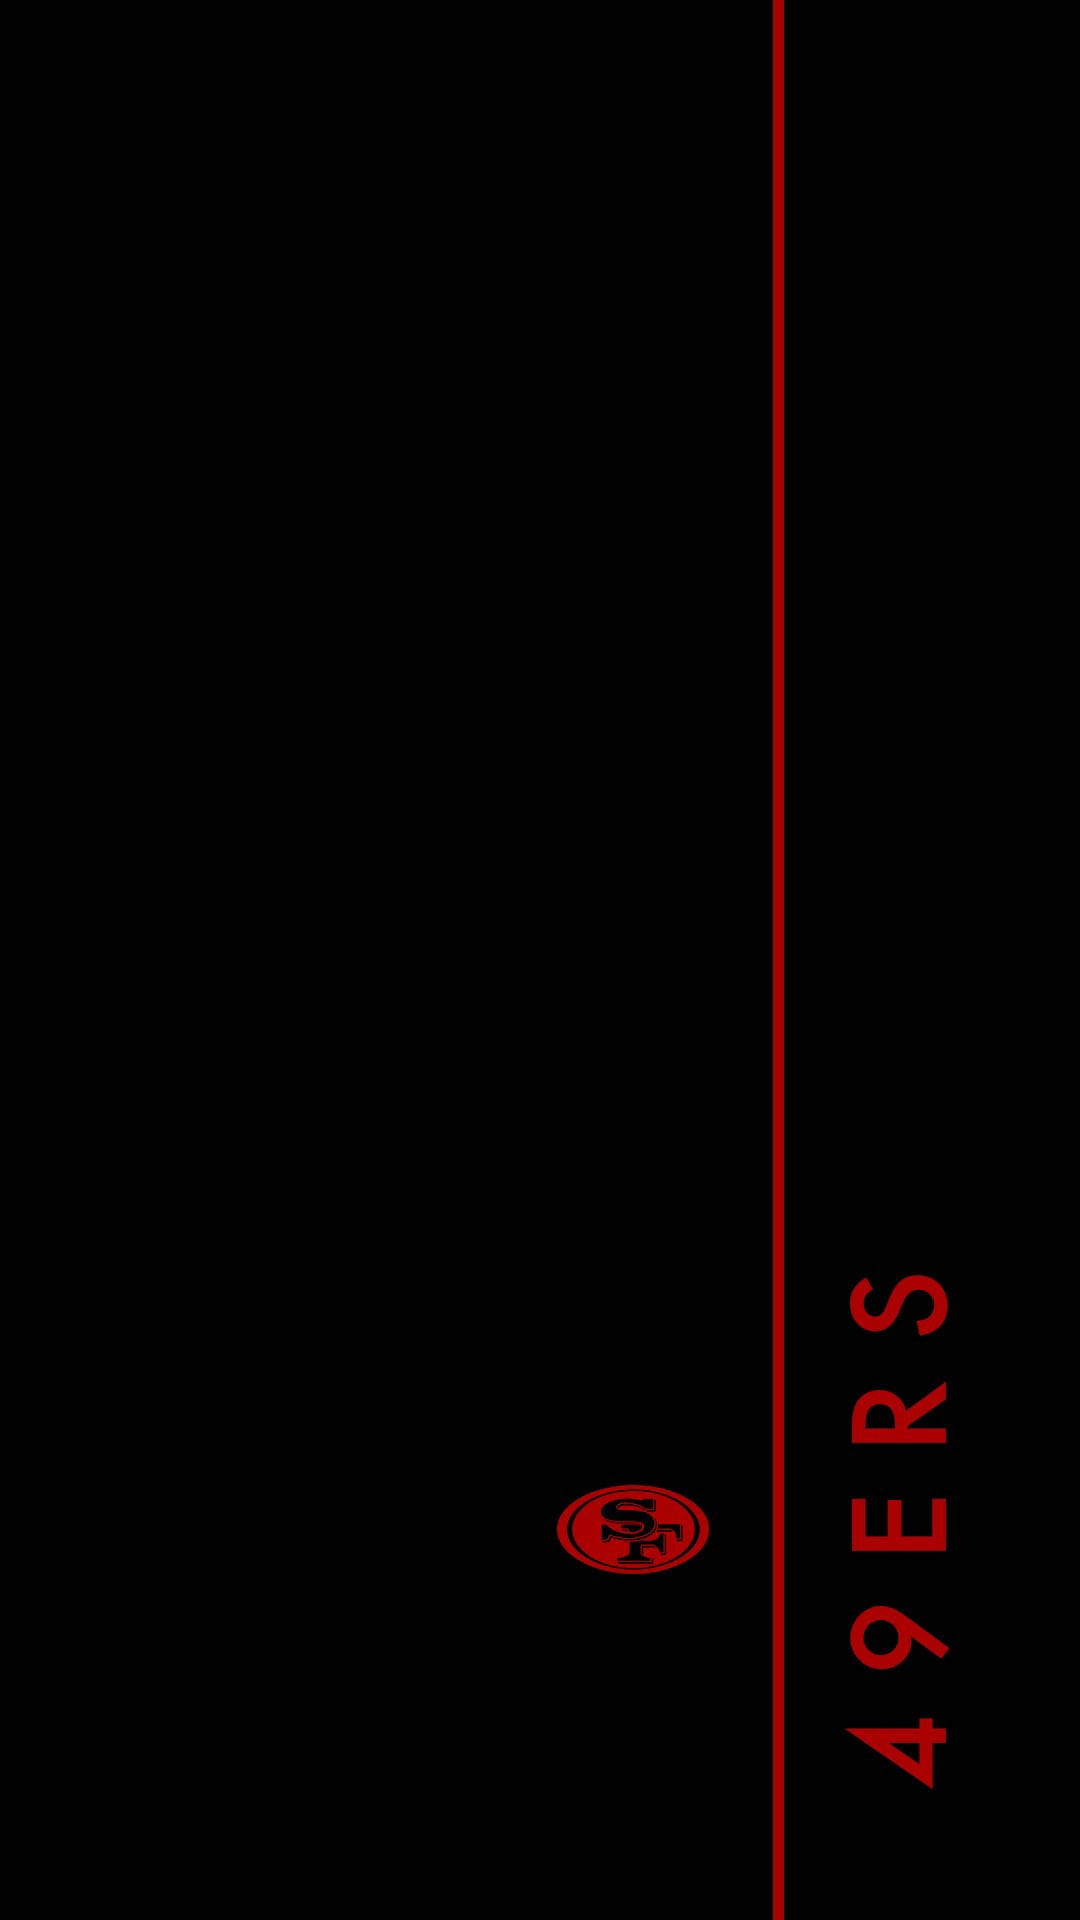 Simple Black Red 49ers Iphone Wallpaper